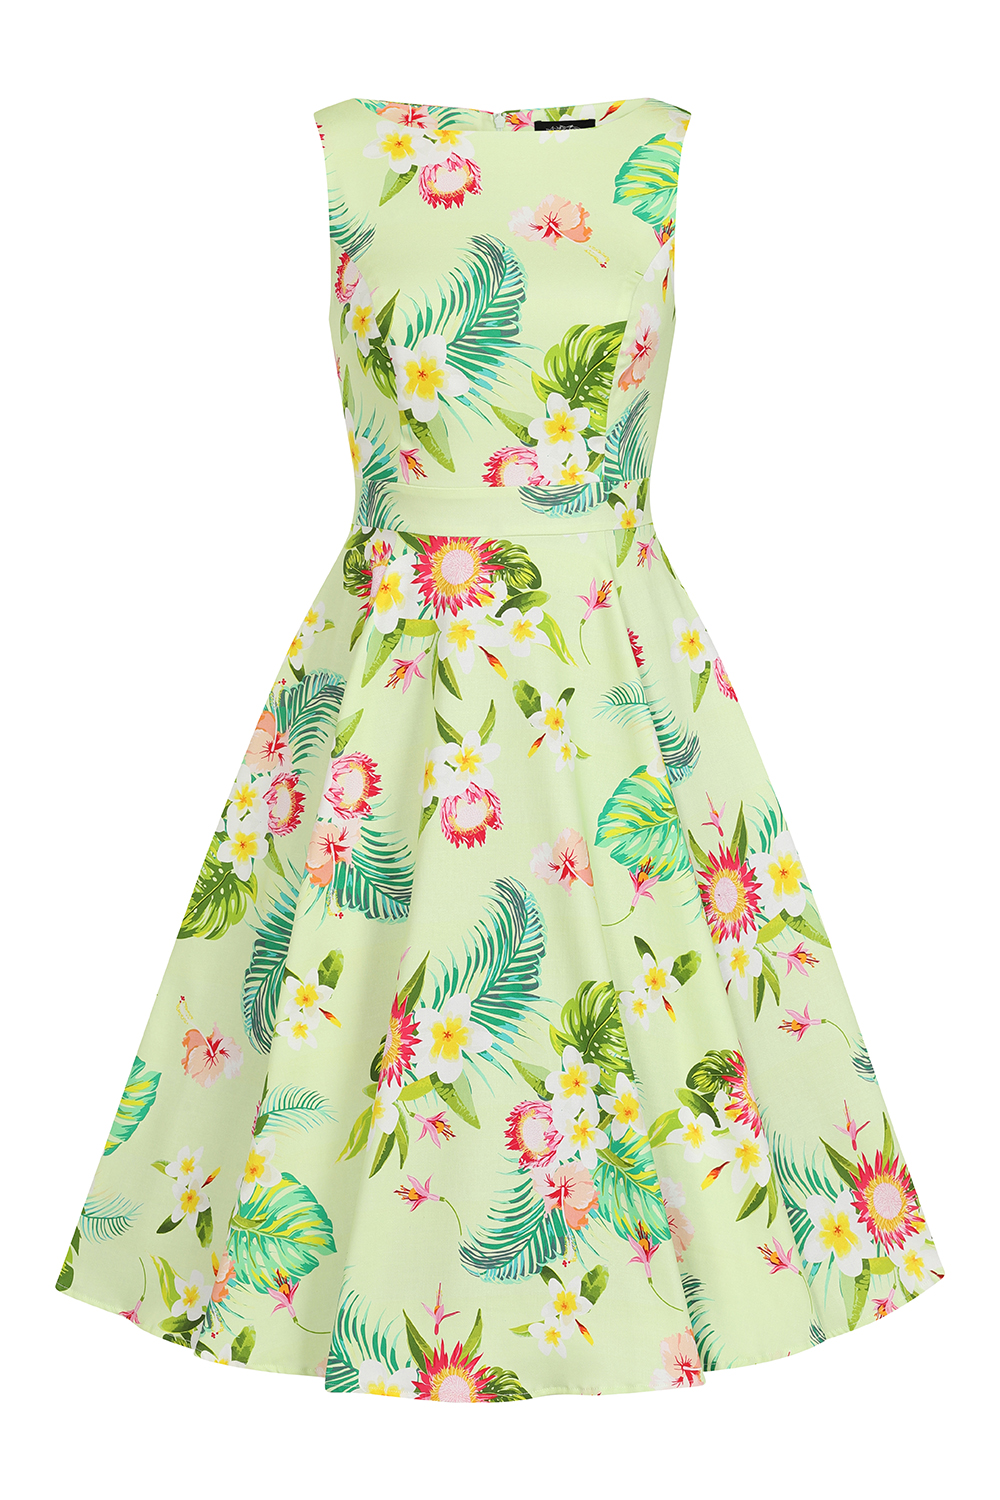 Luisa Tropical Swing Dress in Plus Size